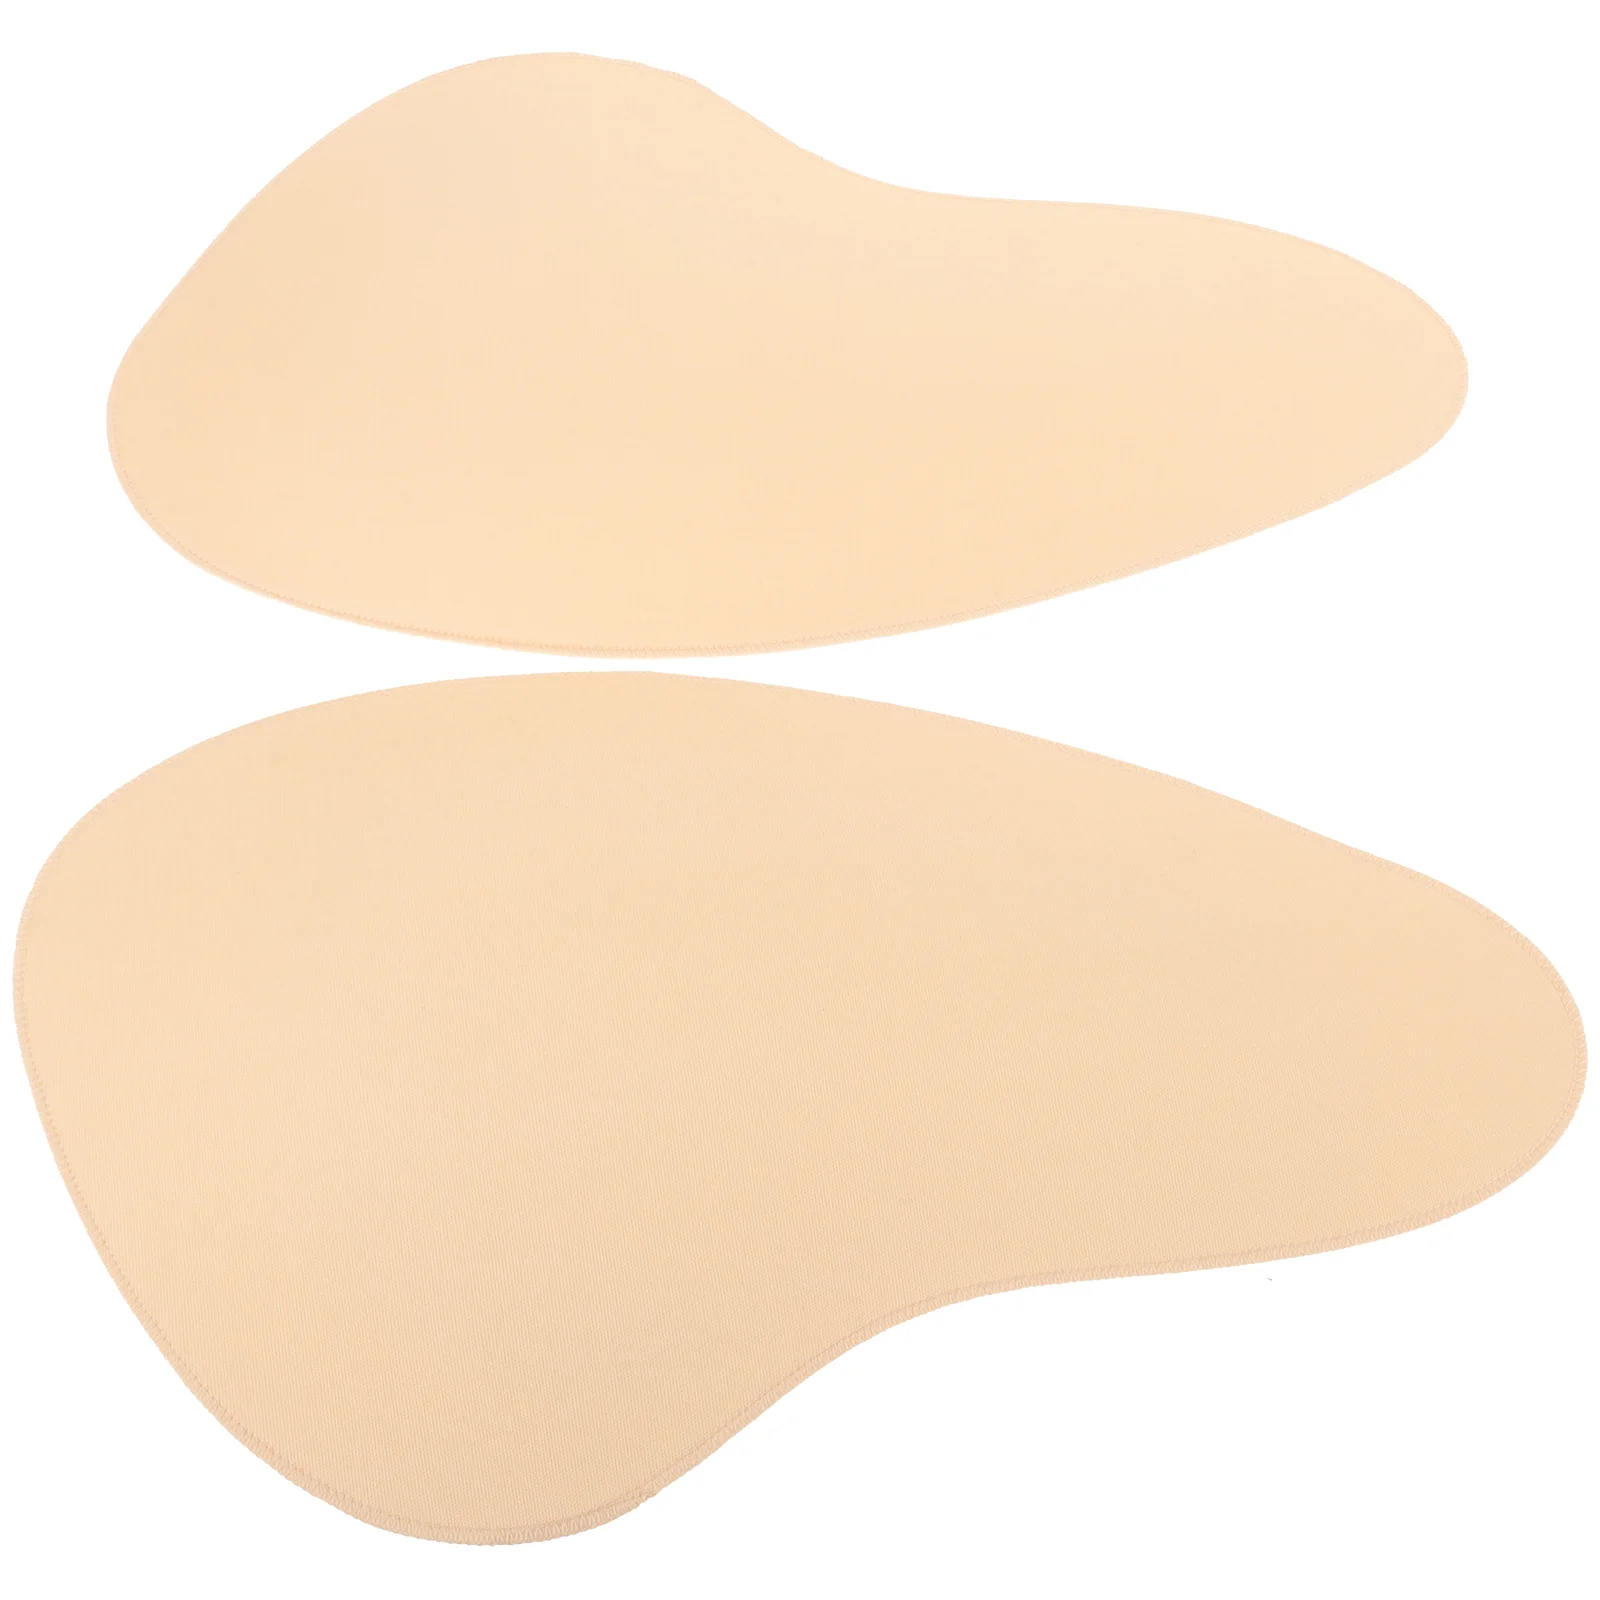 

Pads Hip Lift Lifter Enhancer Buttock Sponge Shaper Cushions Inserts Enhancers Buttocks Fake Cushion Pad Insert Lifting Padding